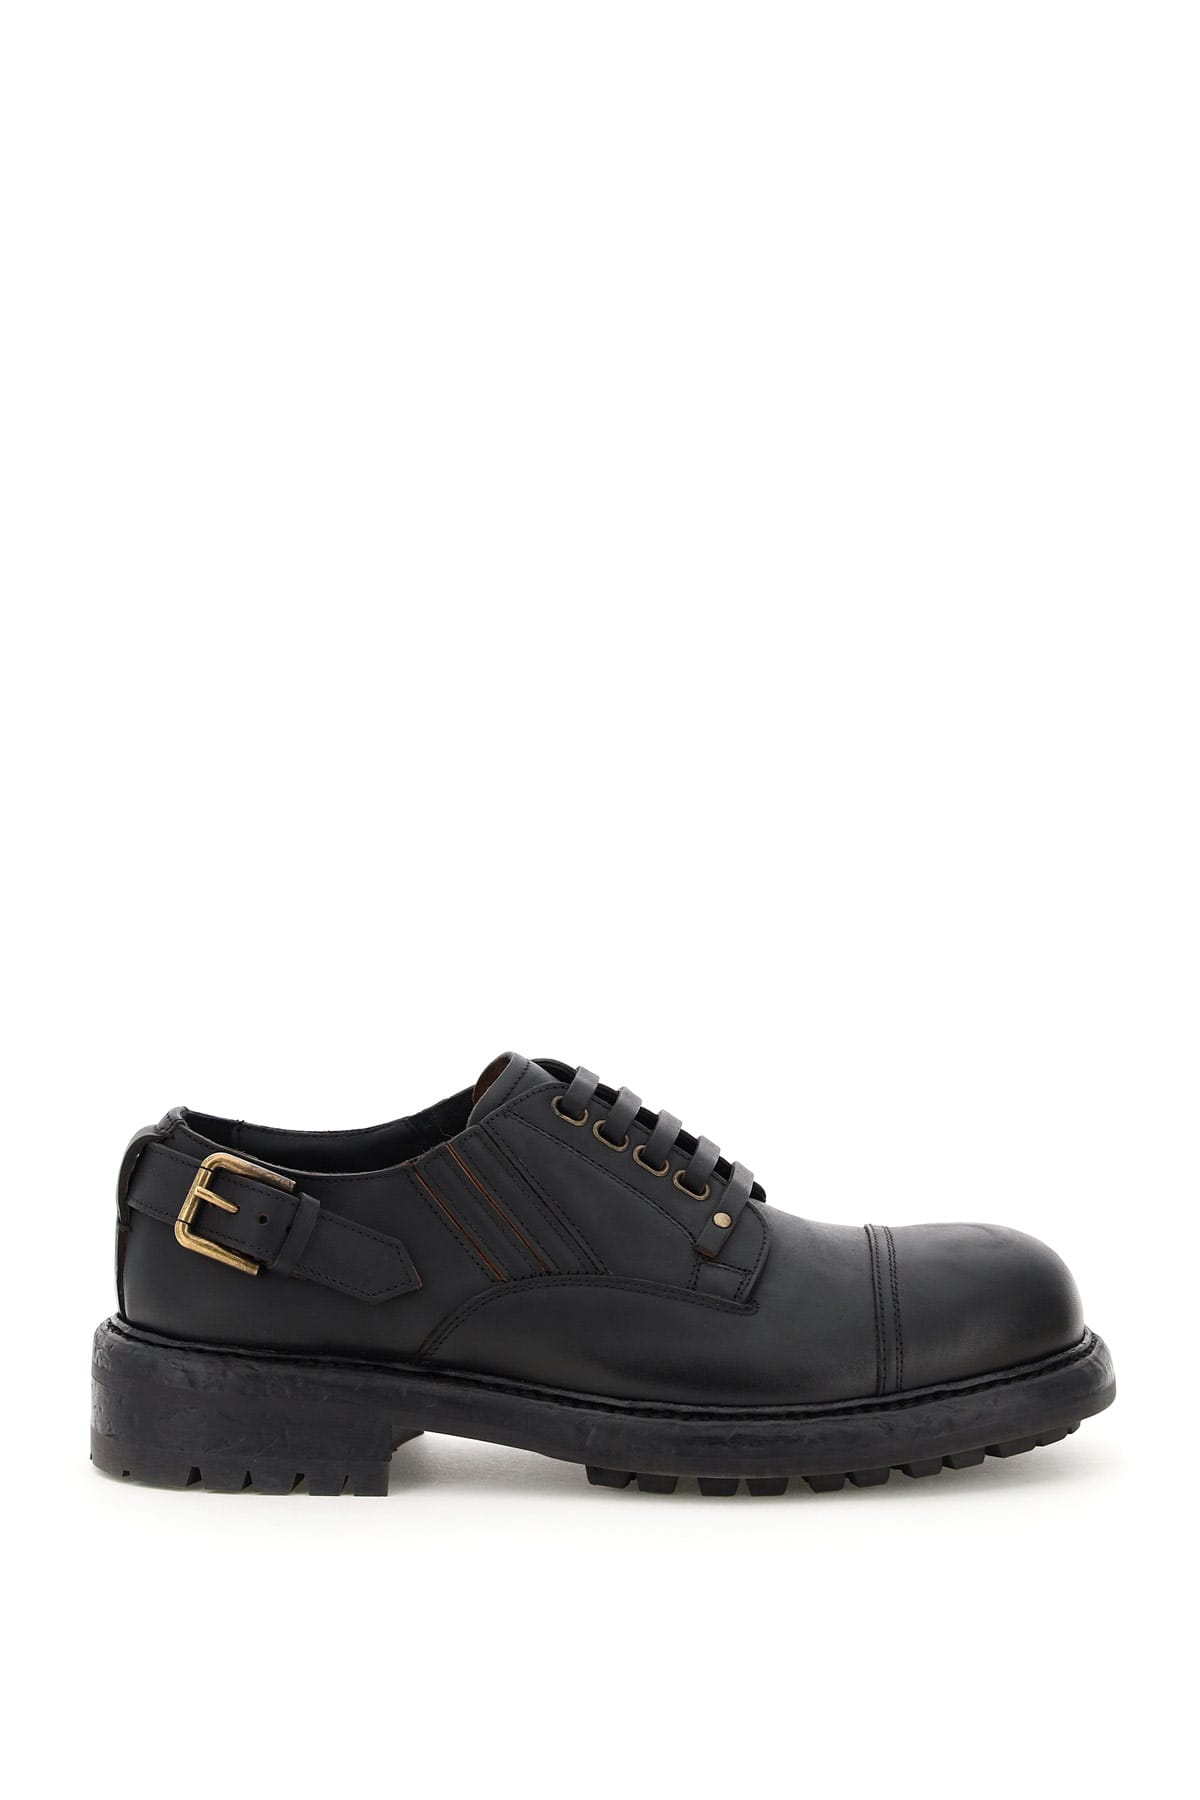 Dolce & Gabbana Bernini Slip-on Shoes